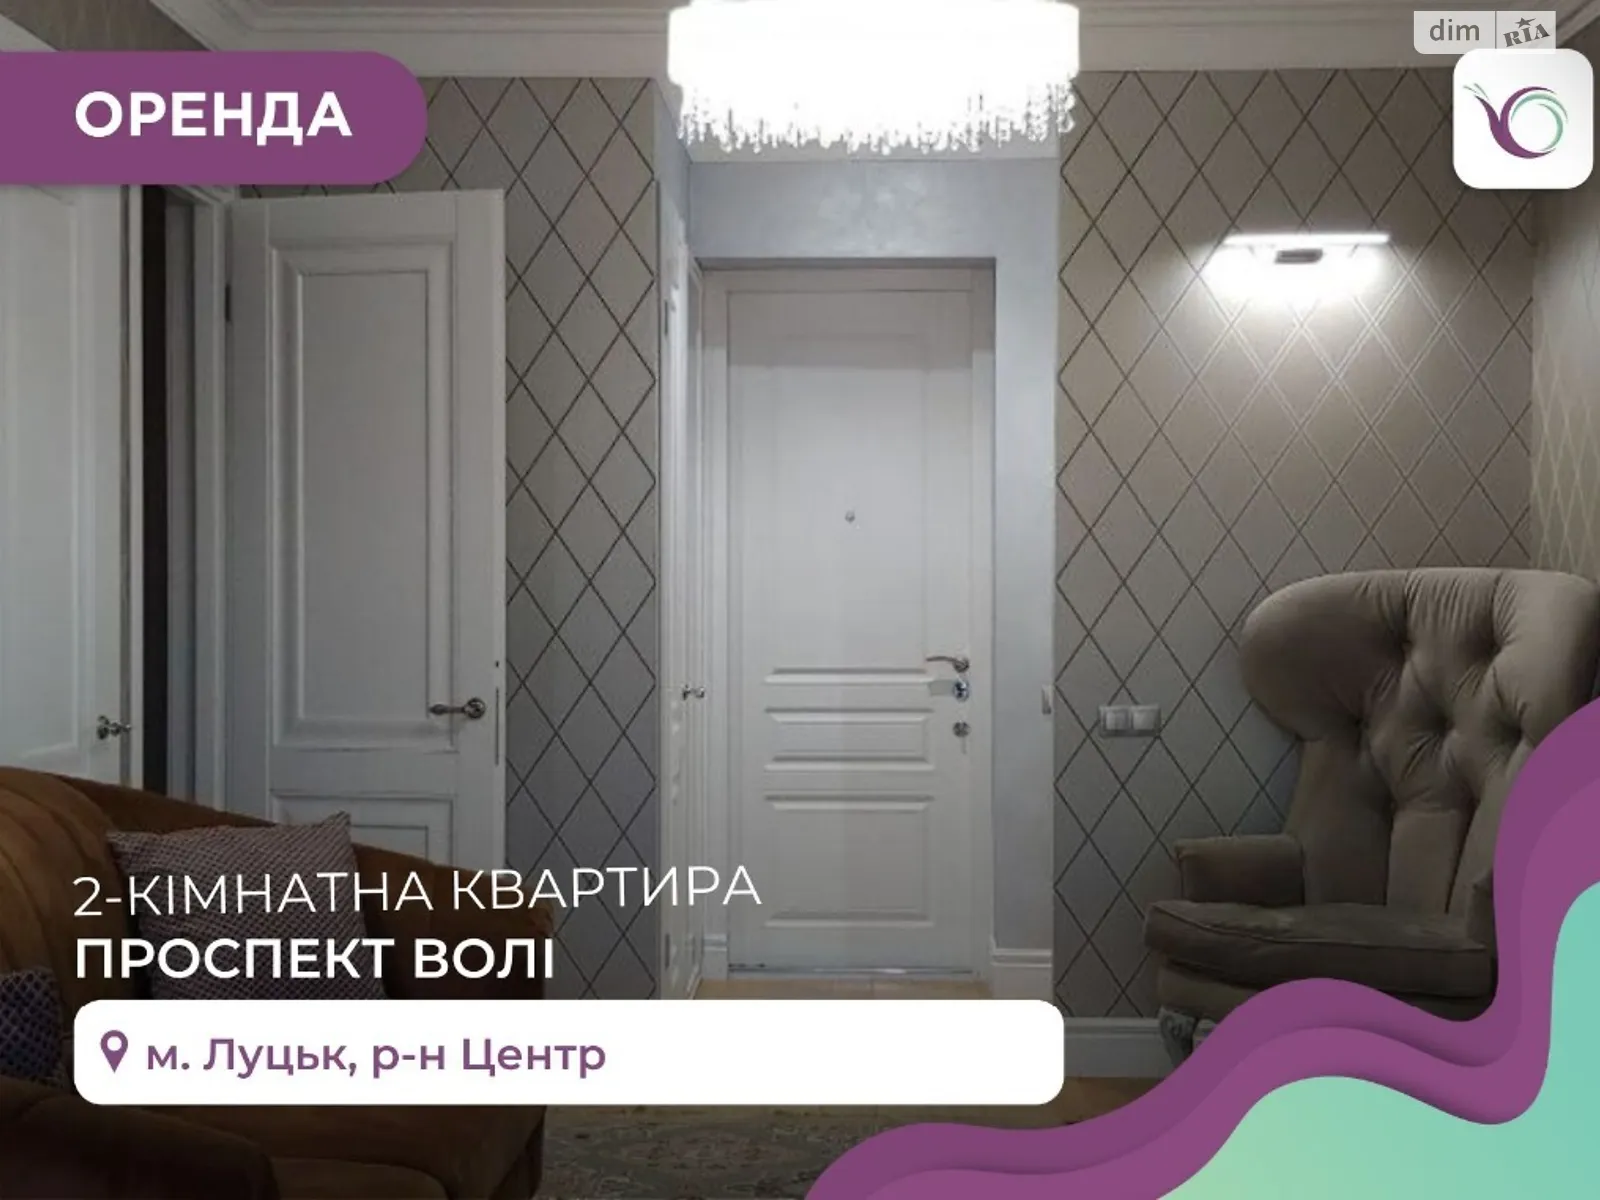 2-кімнатна квартира 66 кв. м у Луцьку, цена: 599 €